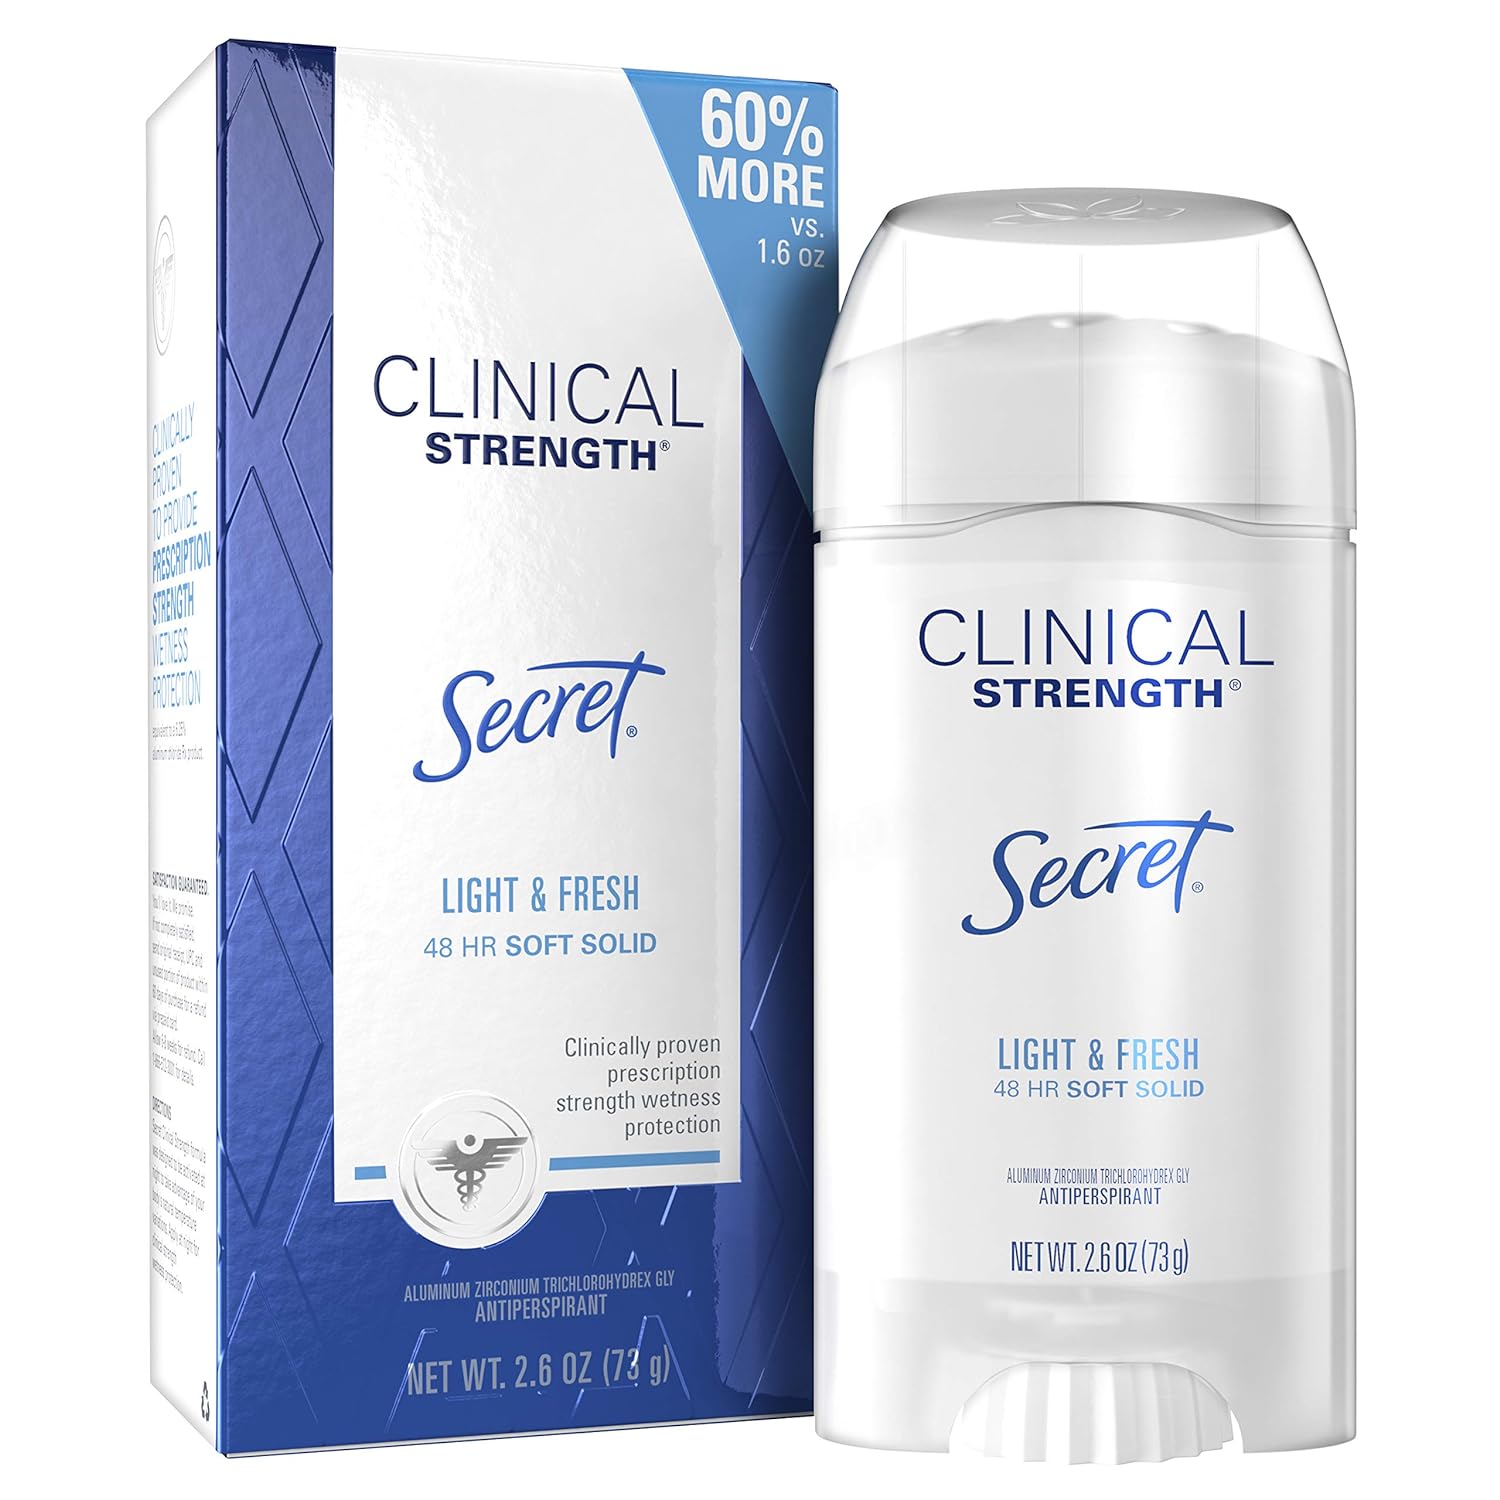  Secret Antiperspirant Clinical Strength Deodorant for Women, Soft Solid, Light and Fresh, 2.6 oz